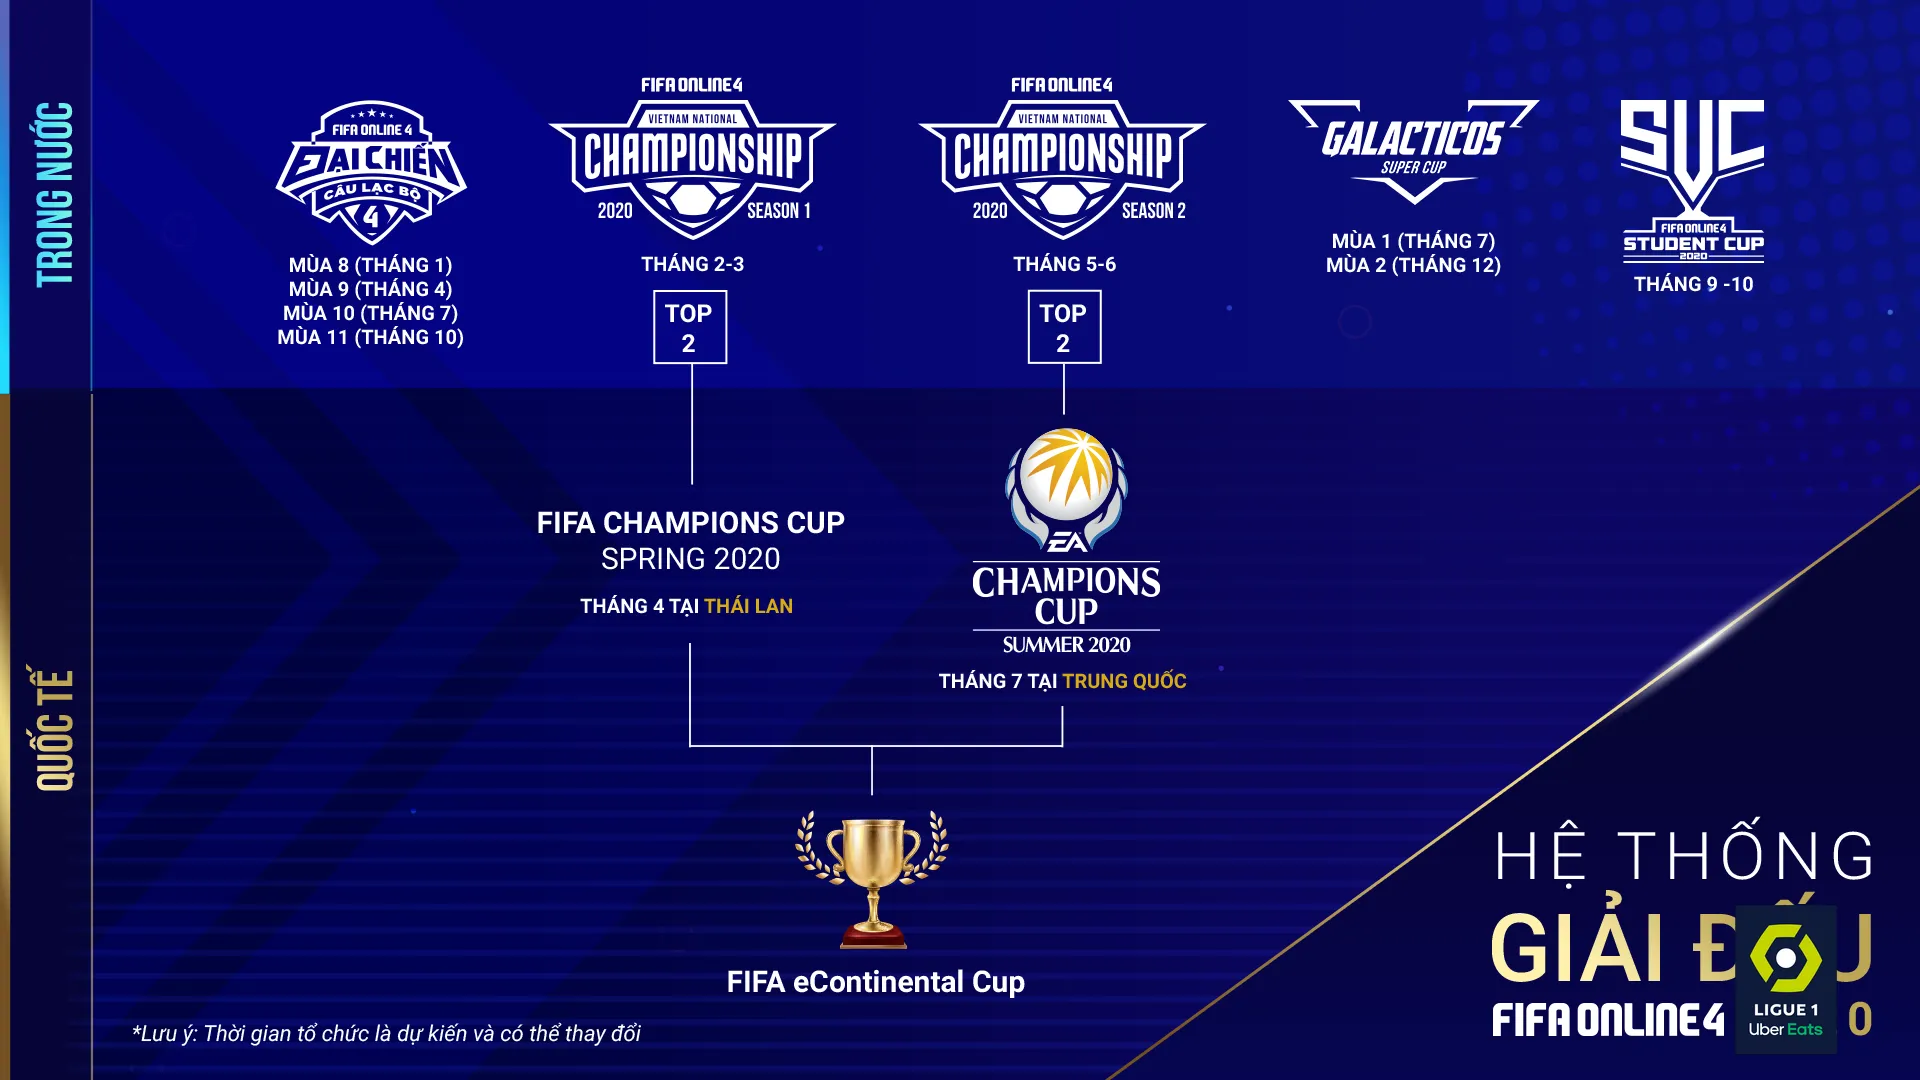 EACC - EA Champions Cup